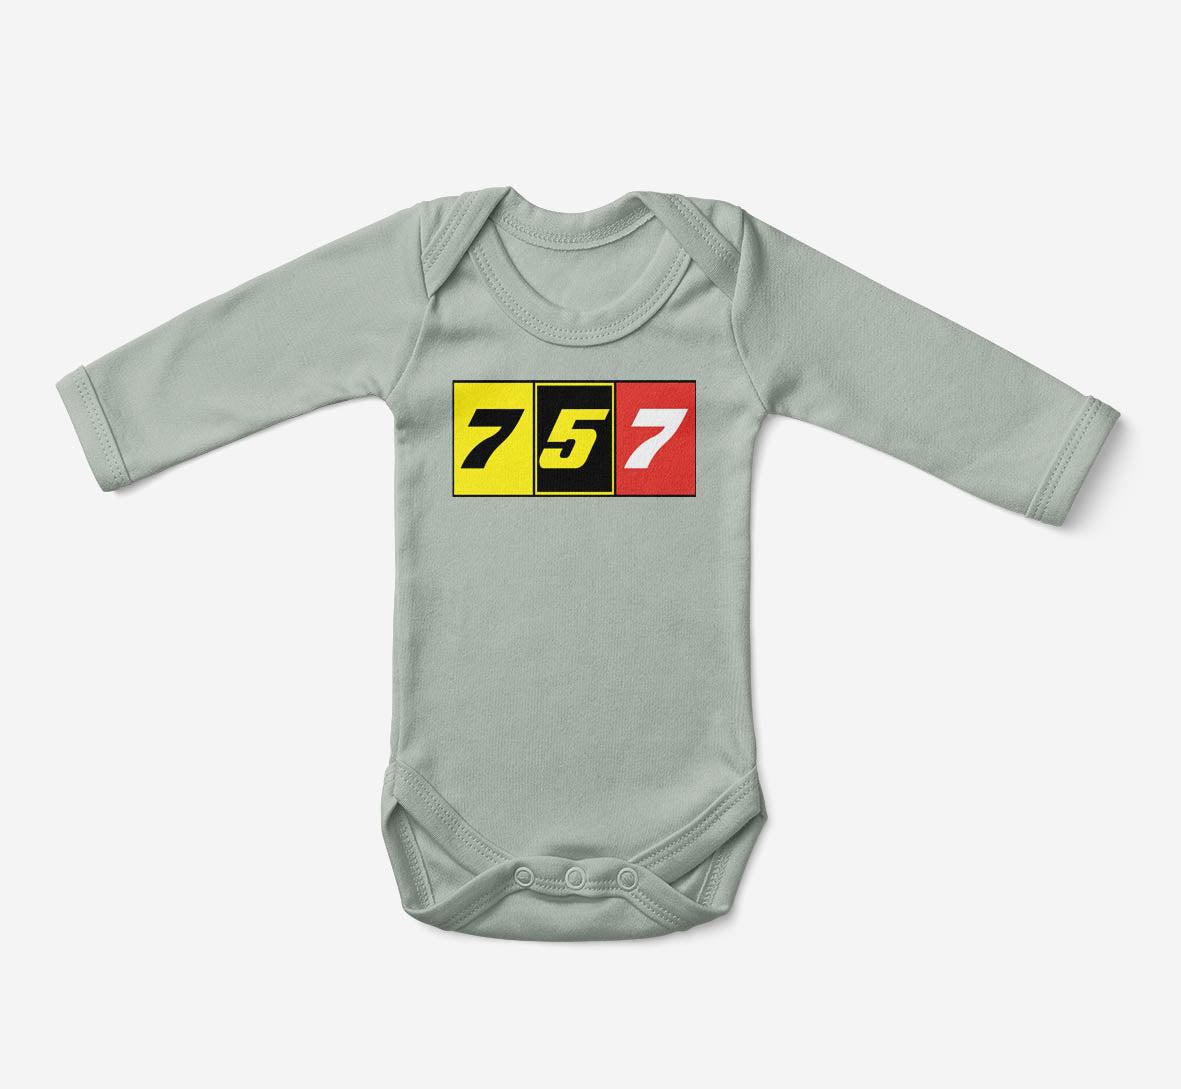 Flat Colourful 767 Designed Baby Bodysuits